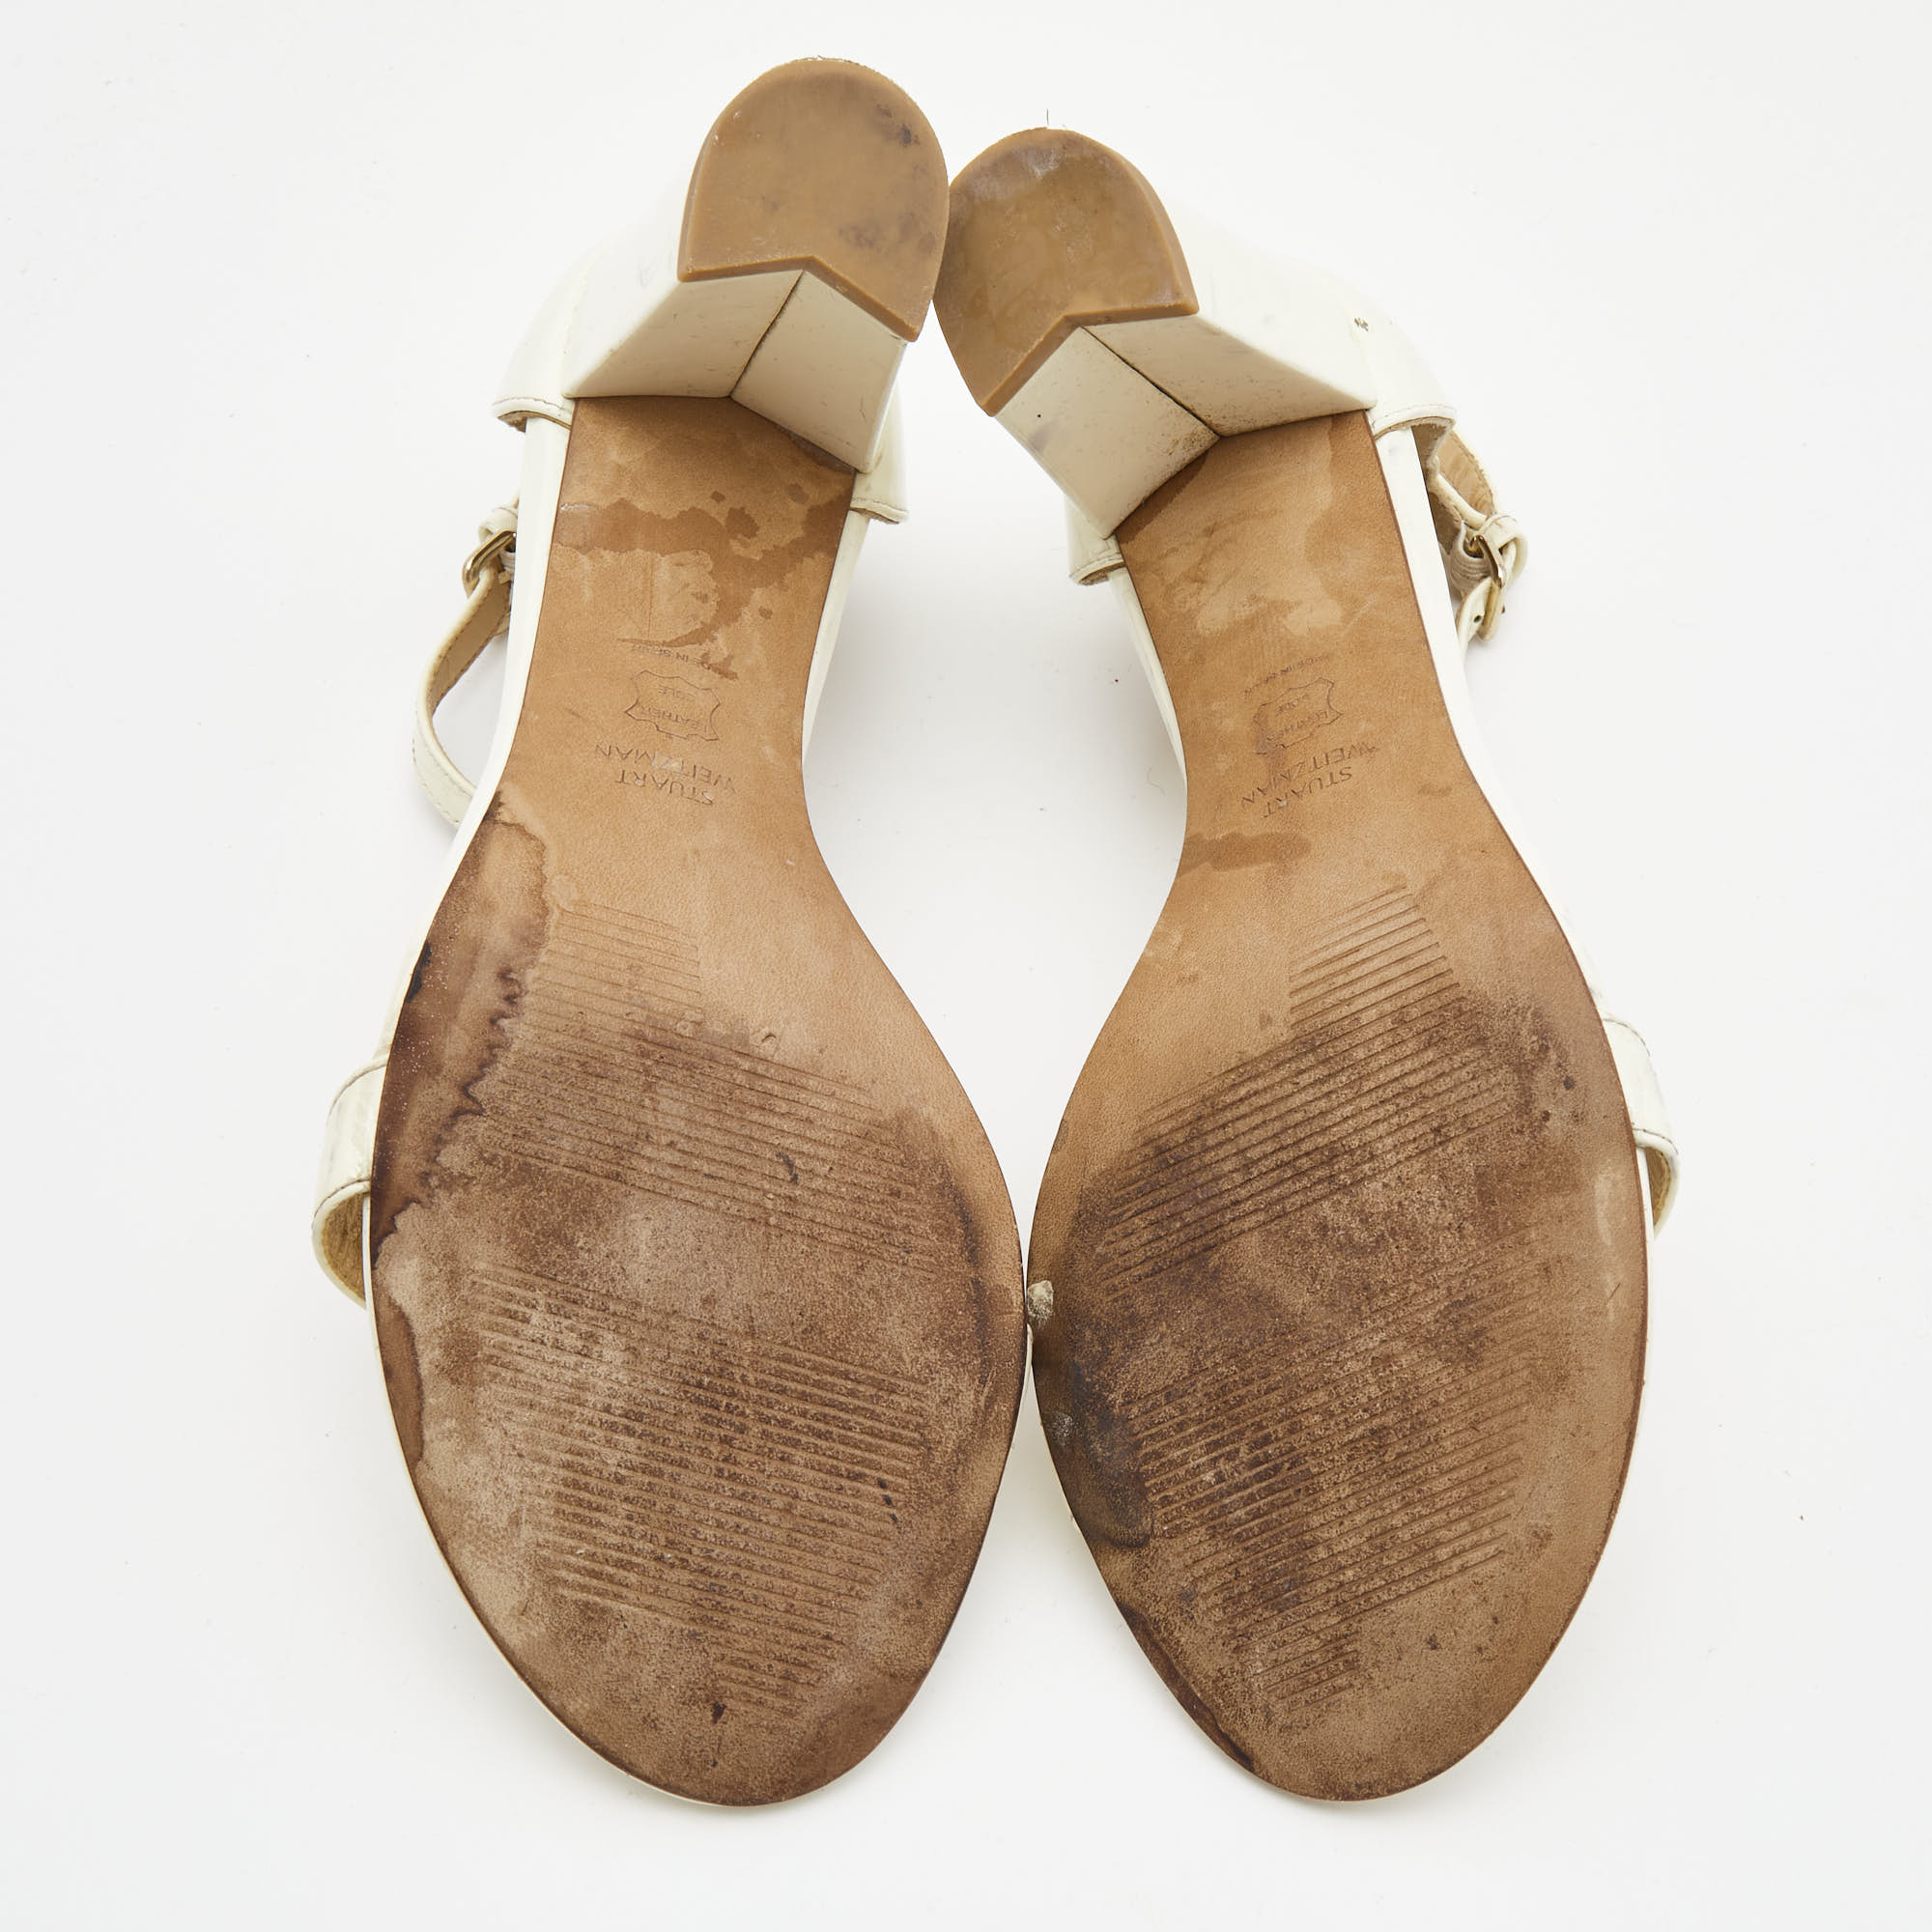 Stuart Weitzman Cream Patent Leather Block Heel Ankle Strap Sandals Size 39.5